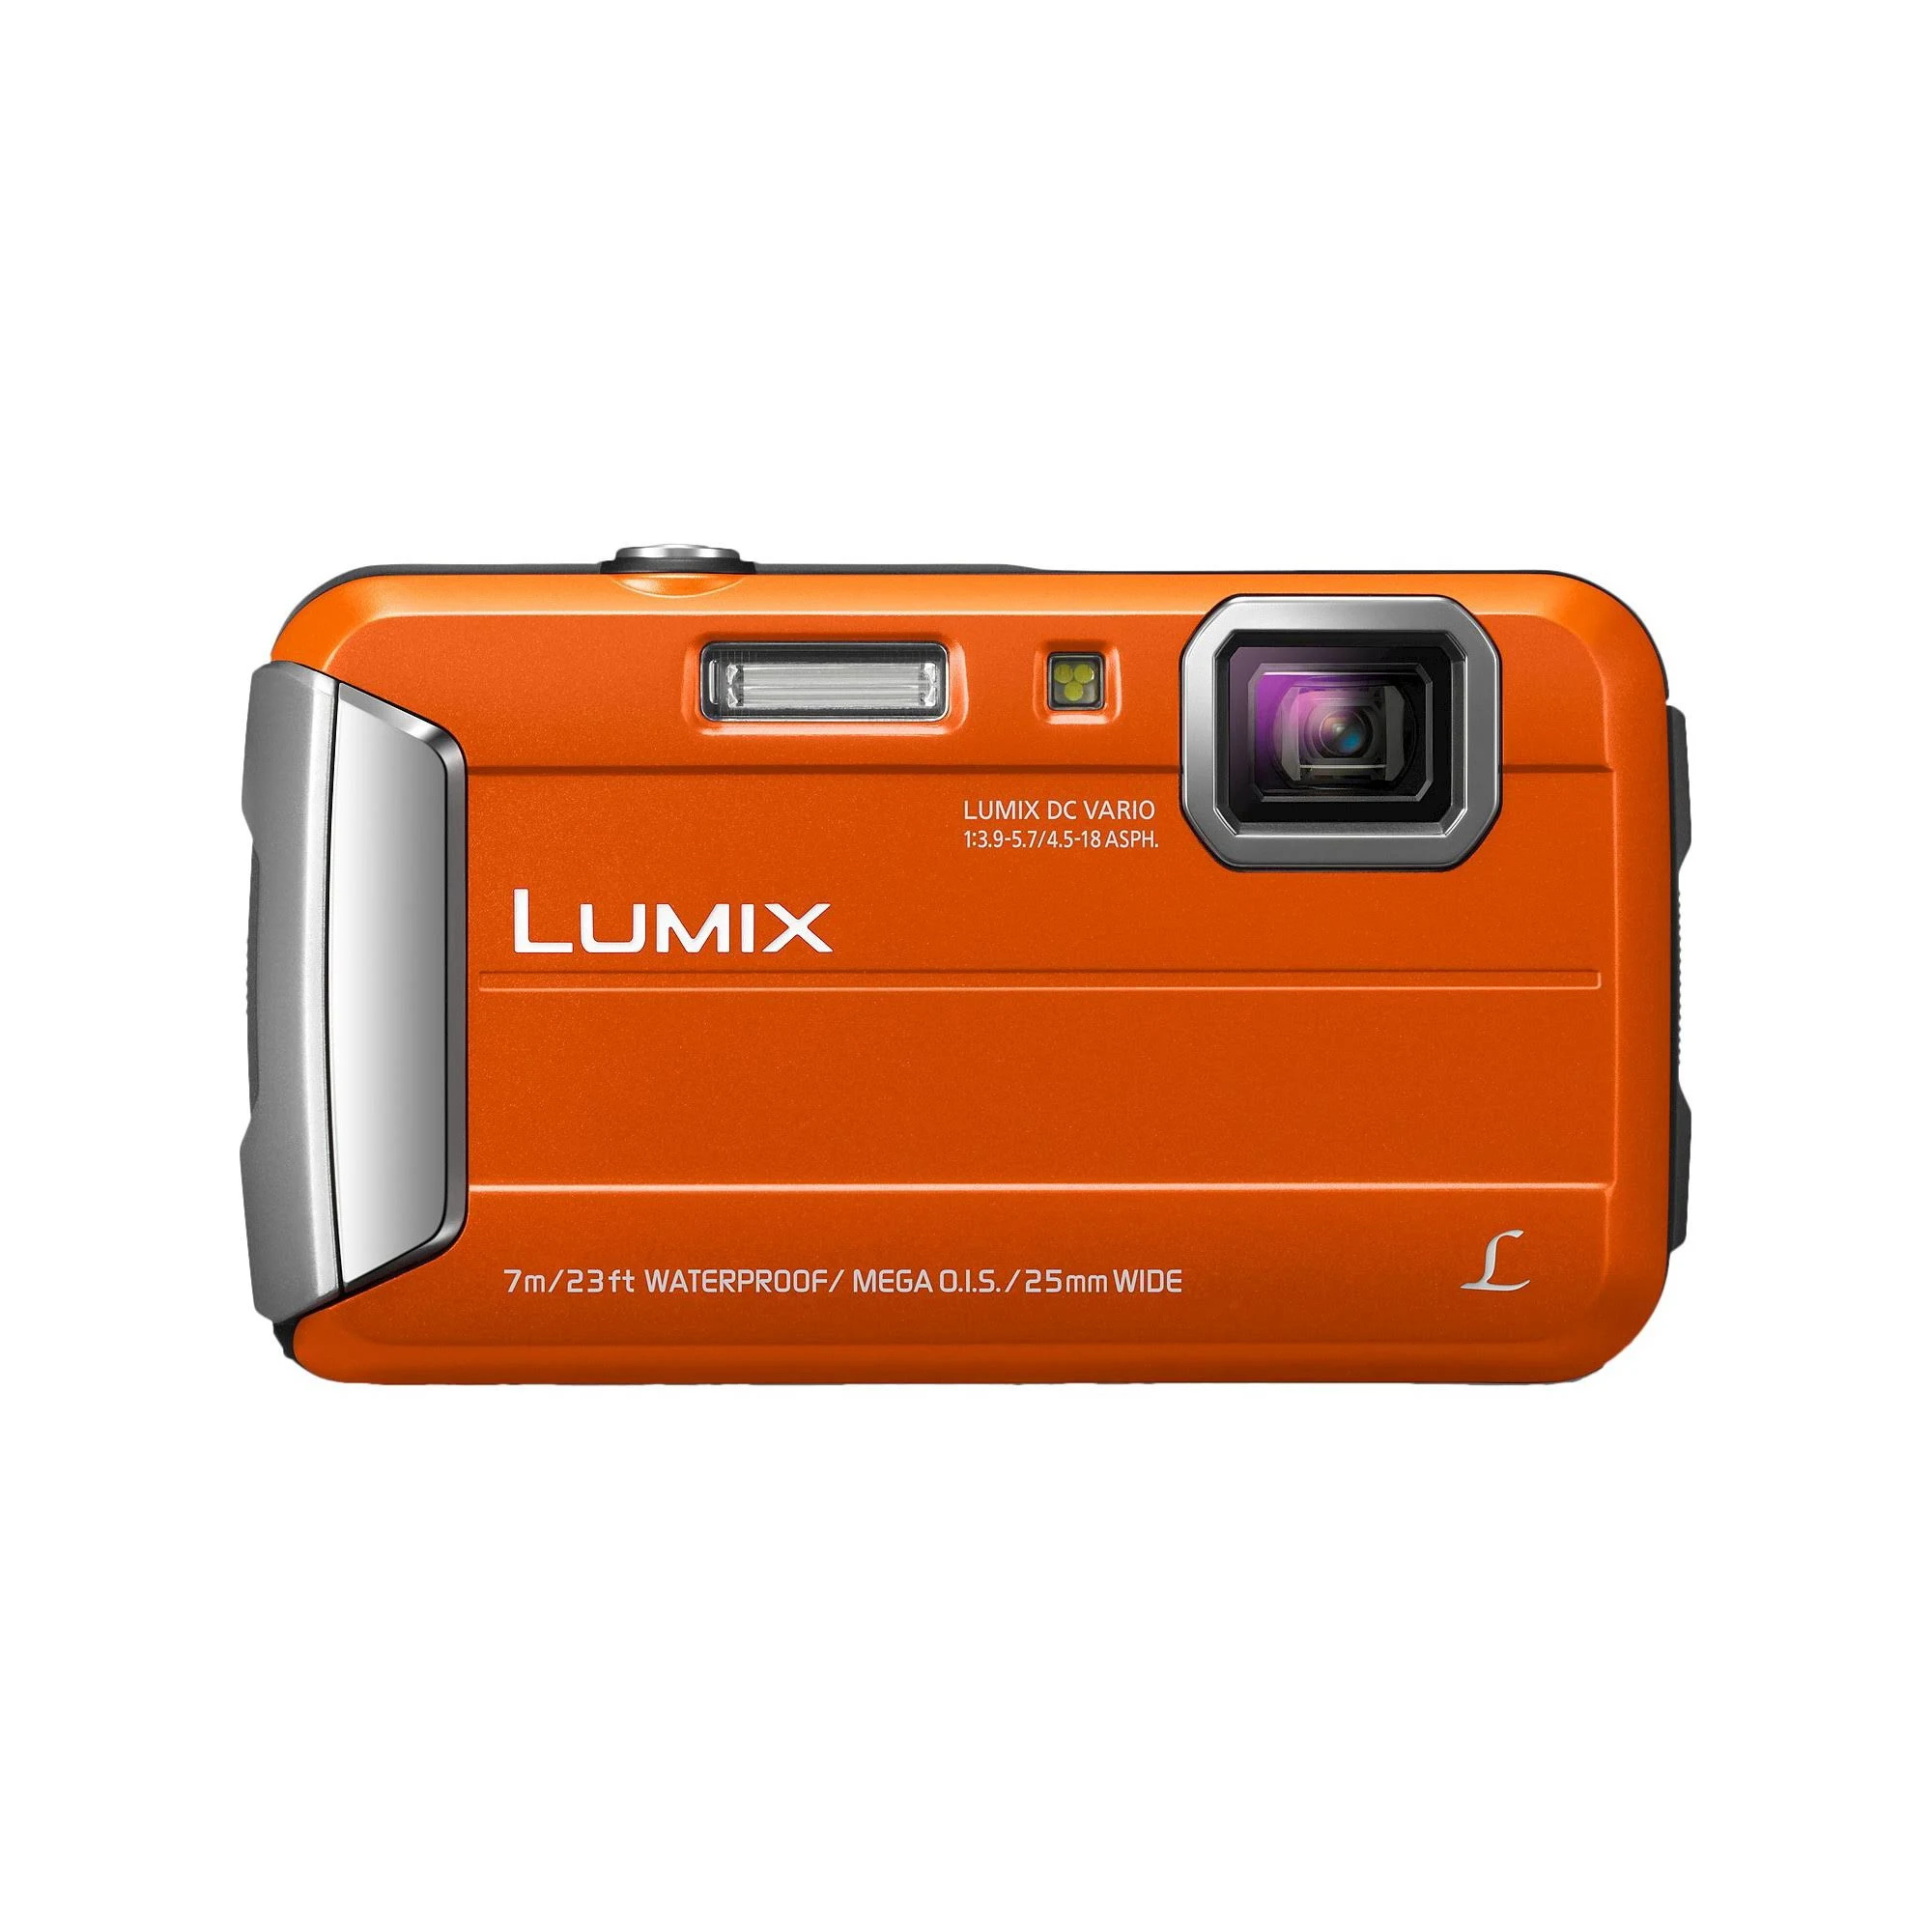 Panasonic Lumix TS25 16MP à prova d'água câmera digital com zoom óptico 4x